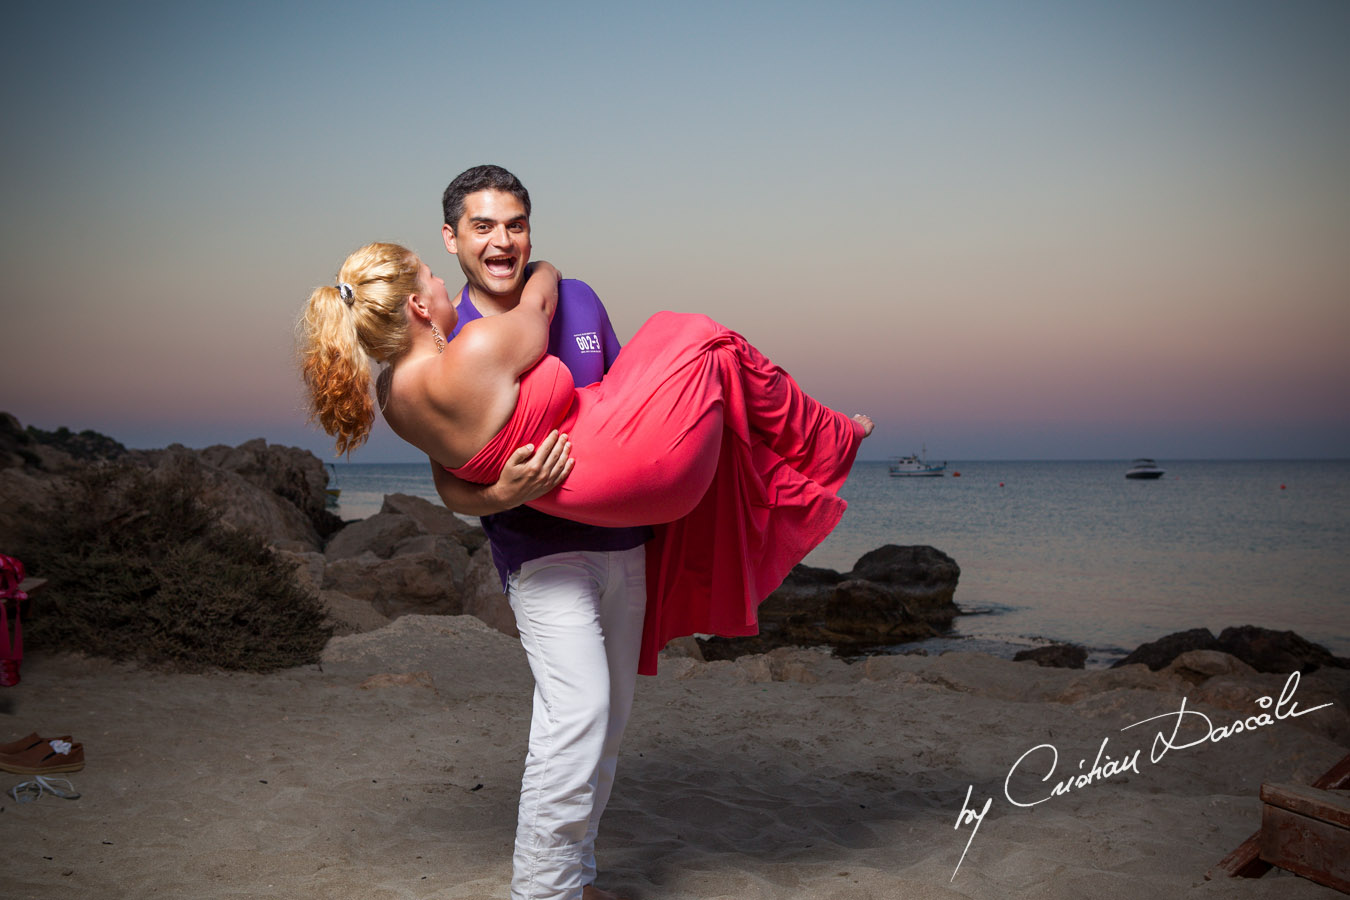 Photo shoot in Cyprus, Agya Napa - Demetris & Anna. Cyprus Photographer: Cristian Dascalu